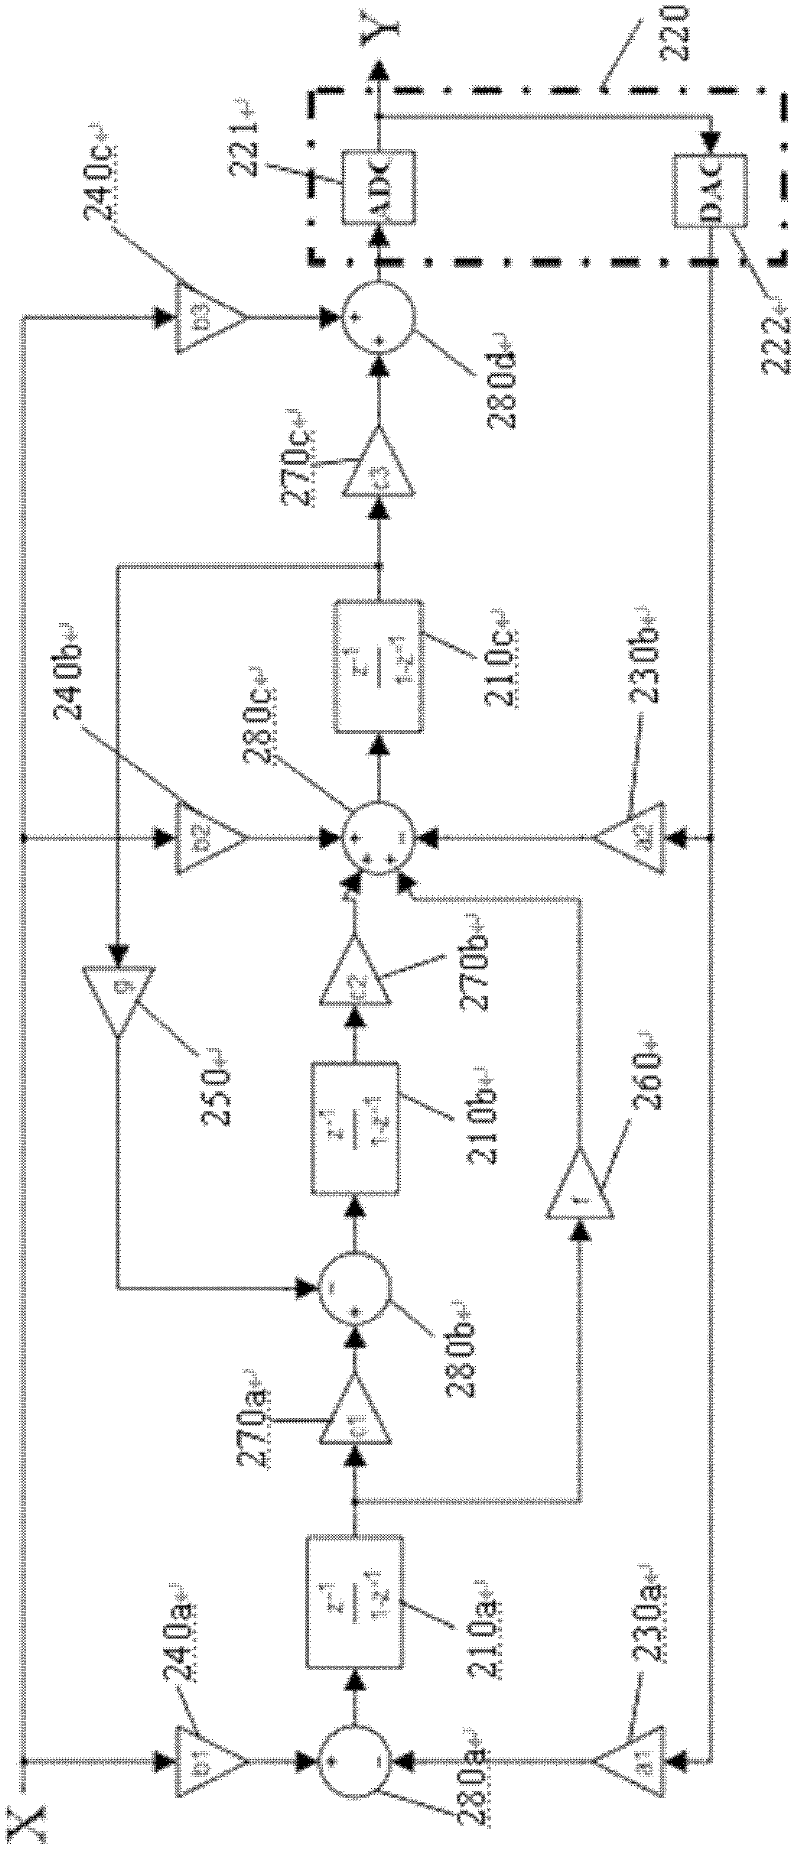 Sigma-Delta modulator and Sigma-Delta analog to digital converter comprising same